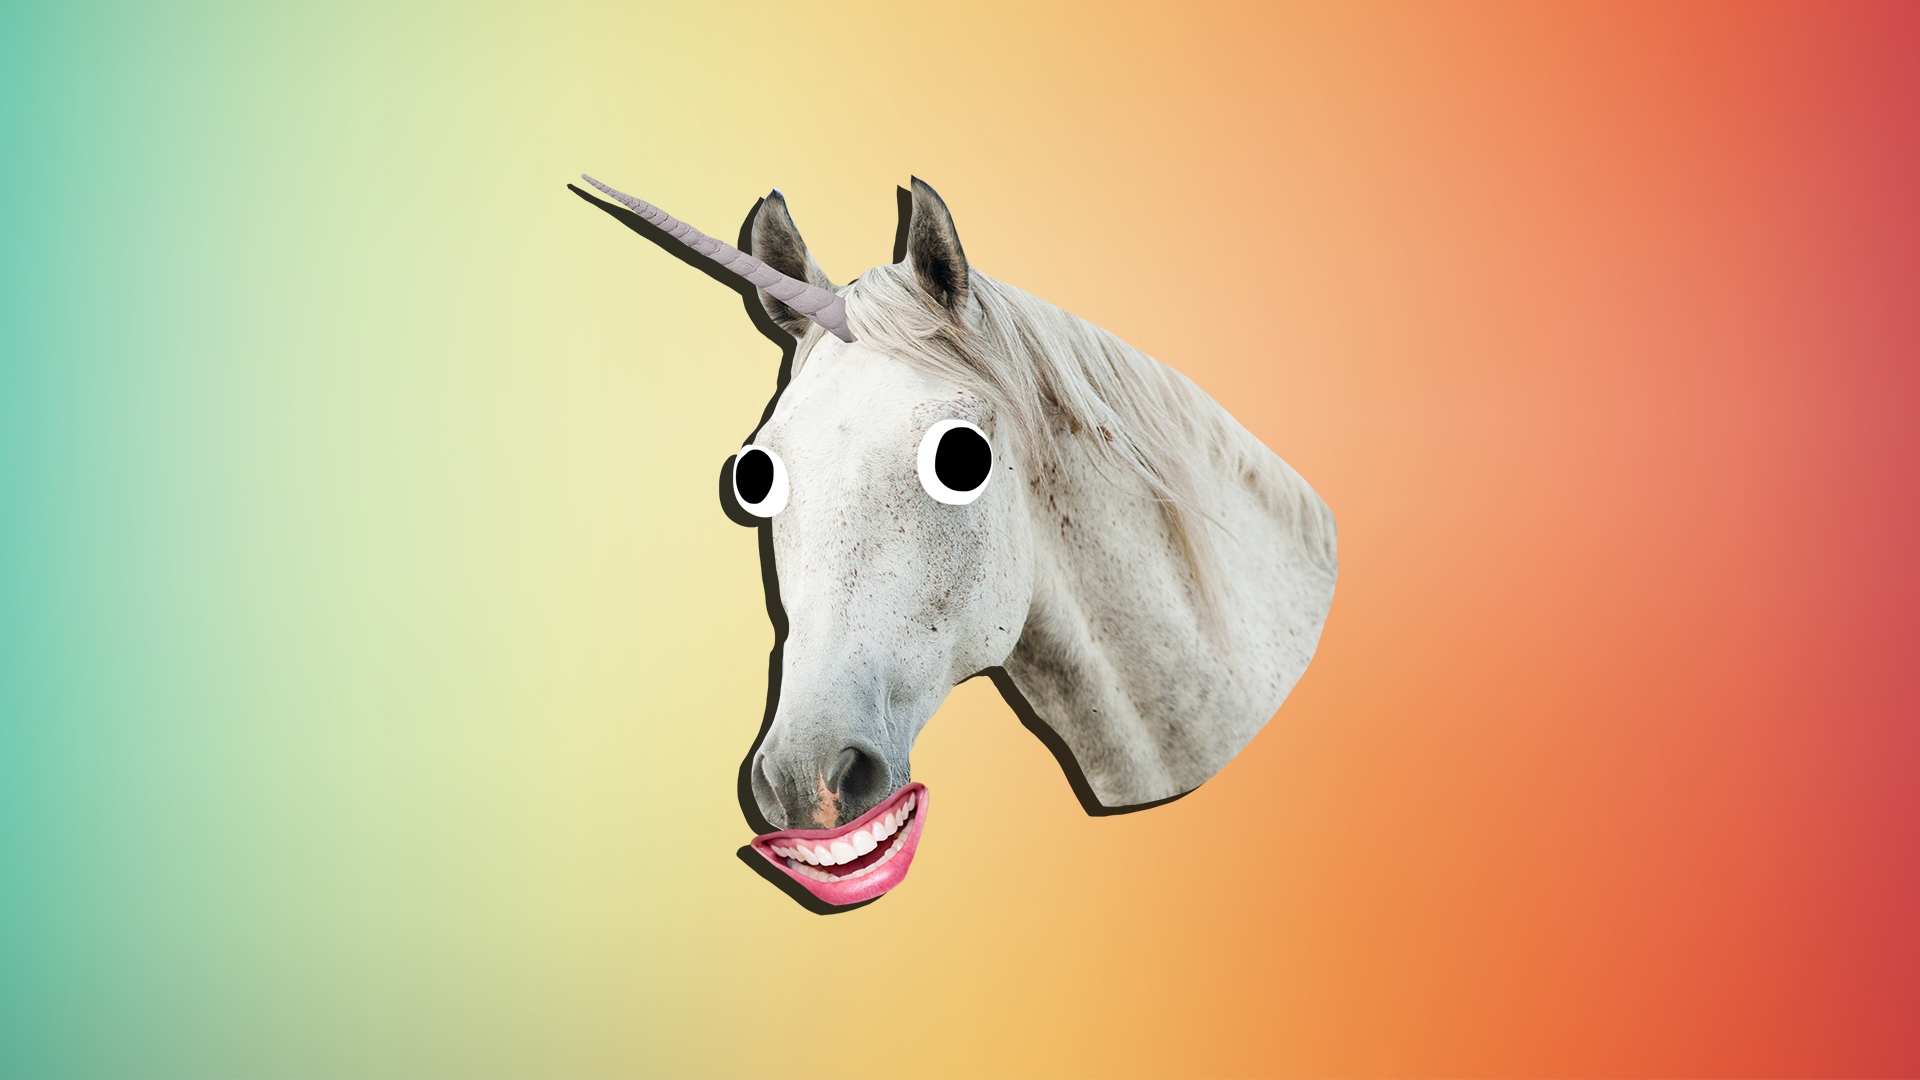 A grinning unicorn